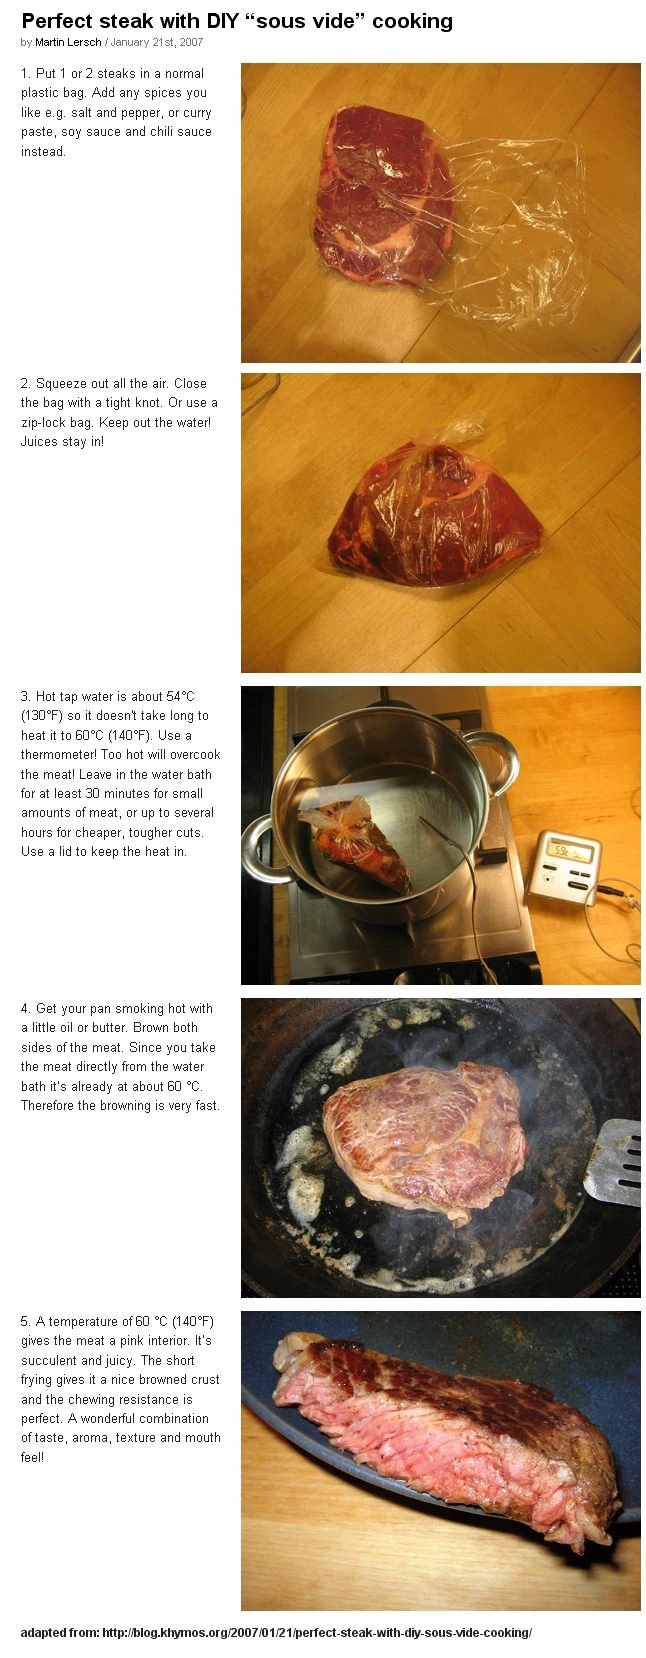 DIY Sous-vide Steak